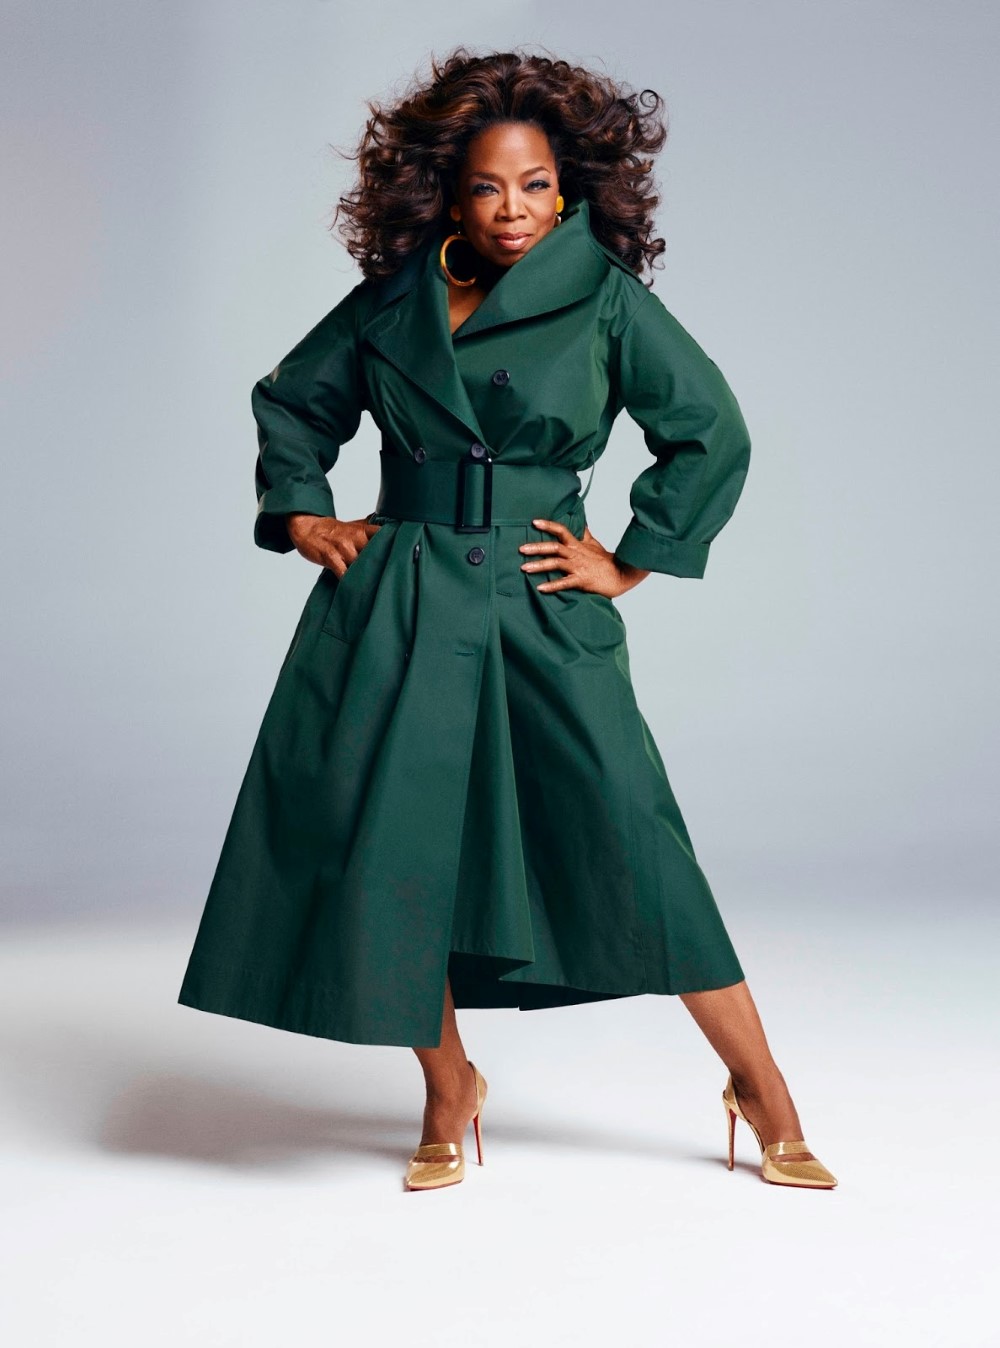 Oprah-InStyle US February 2018 - (1).jpg